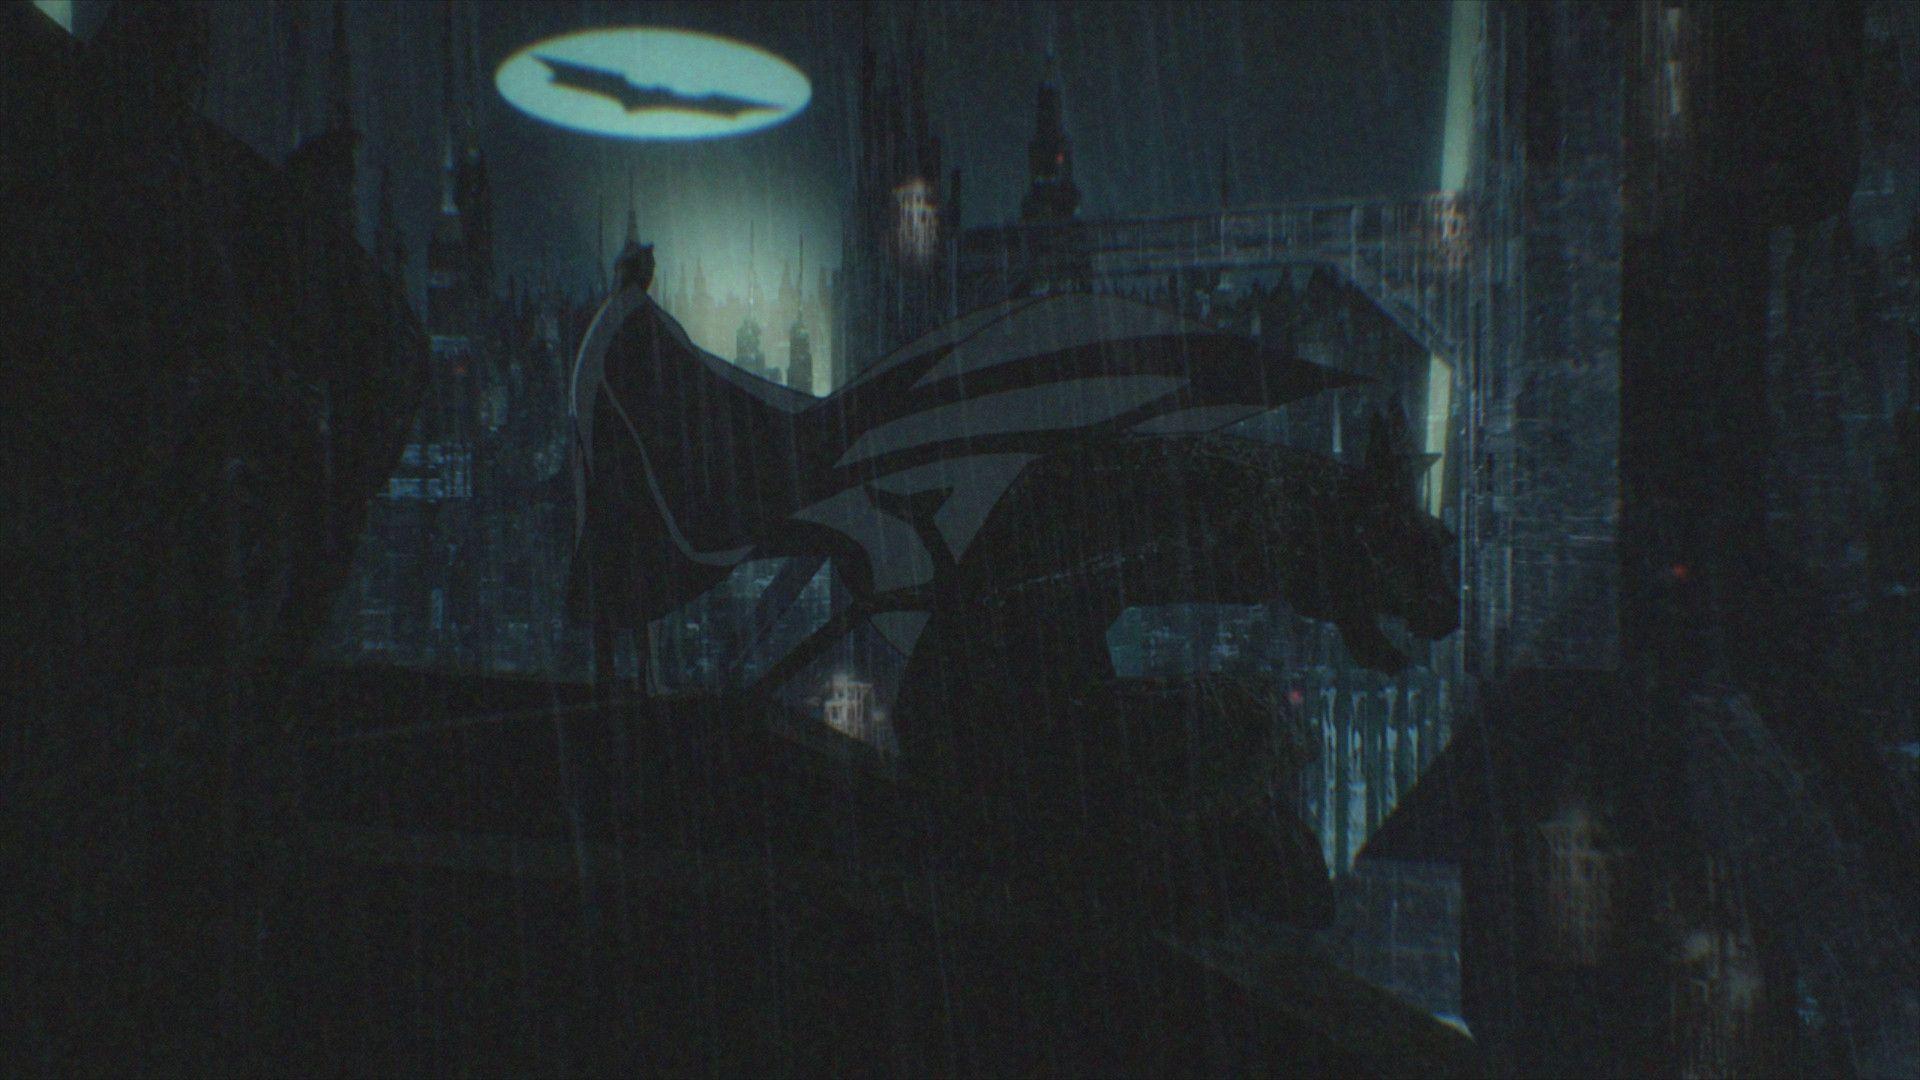 Gotham City Bat Signal Image & Pictures